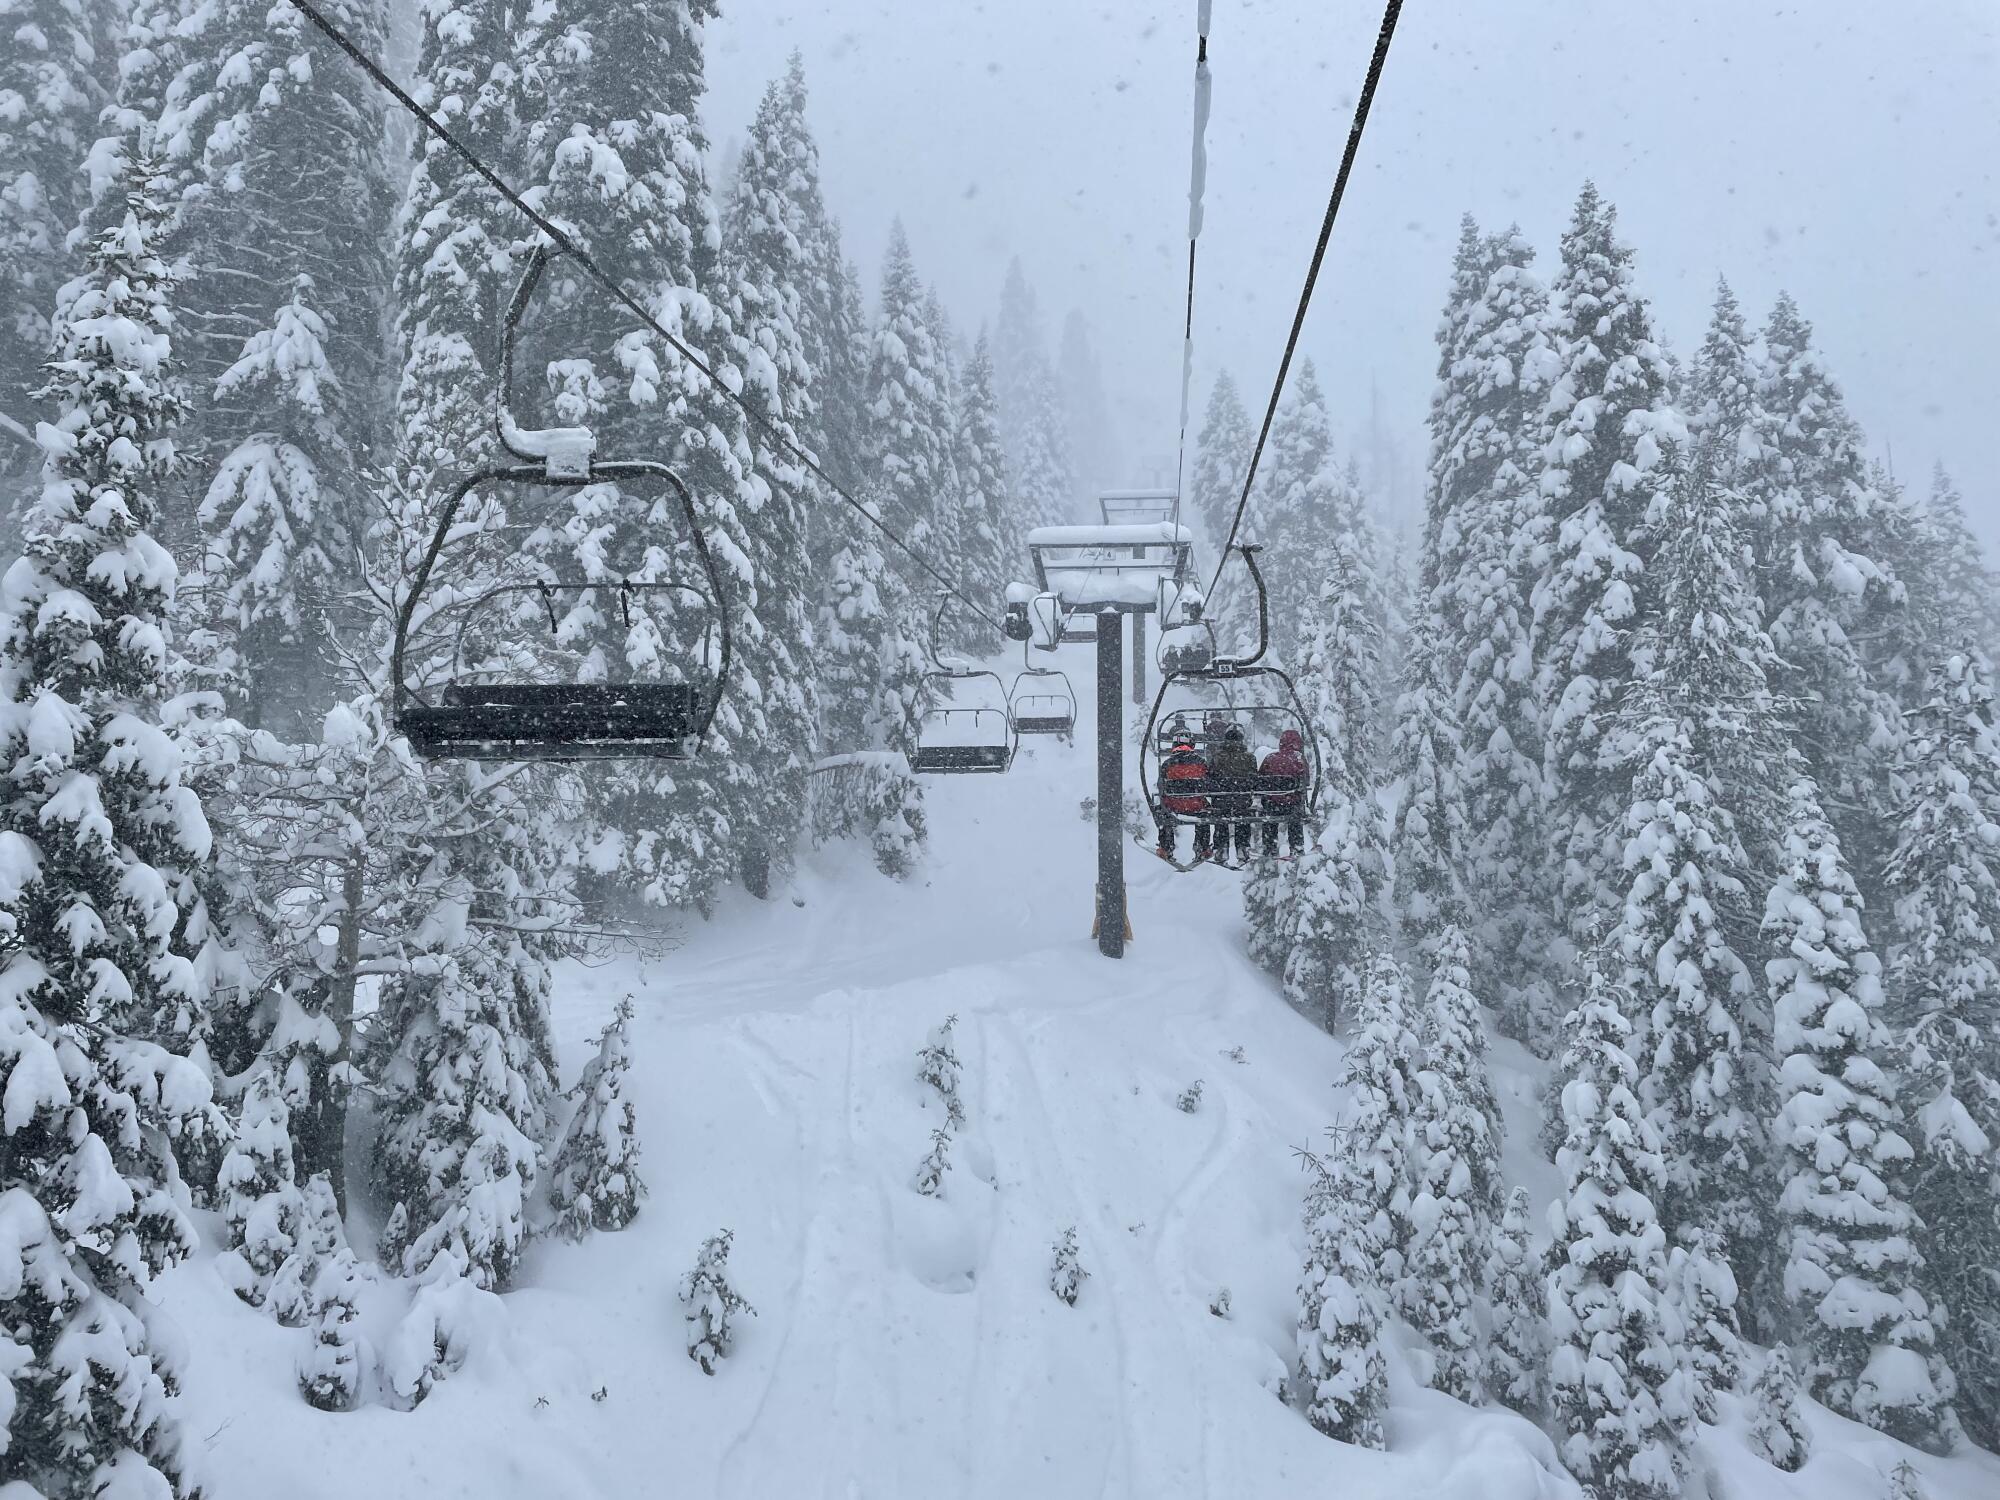 Three people ride on a ski lift